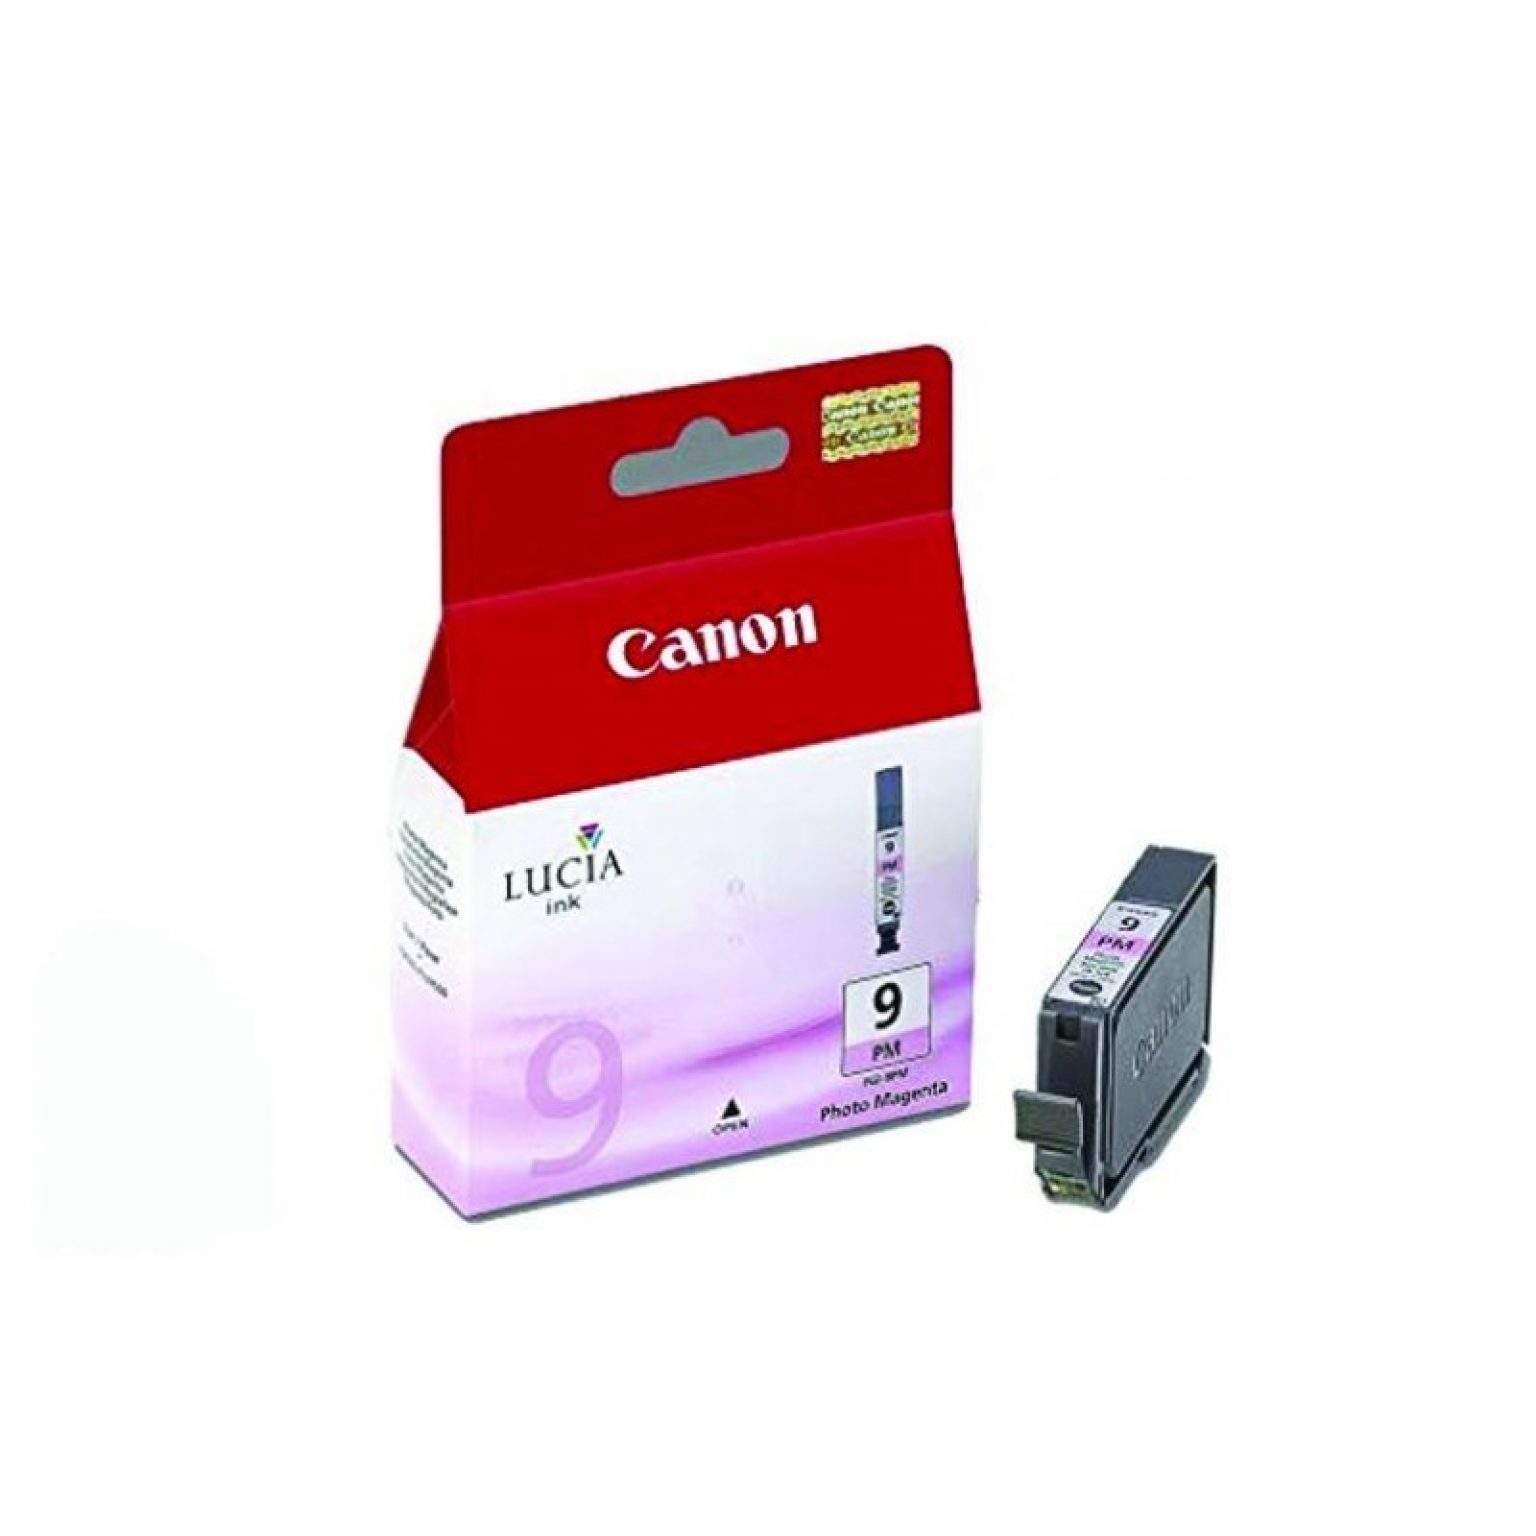 CANON - Ink Cartridge PGI-9 Photo Magenta (LUCIA INK) [PGI-9 PM]